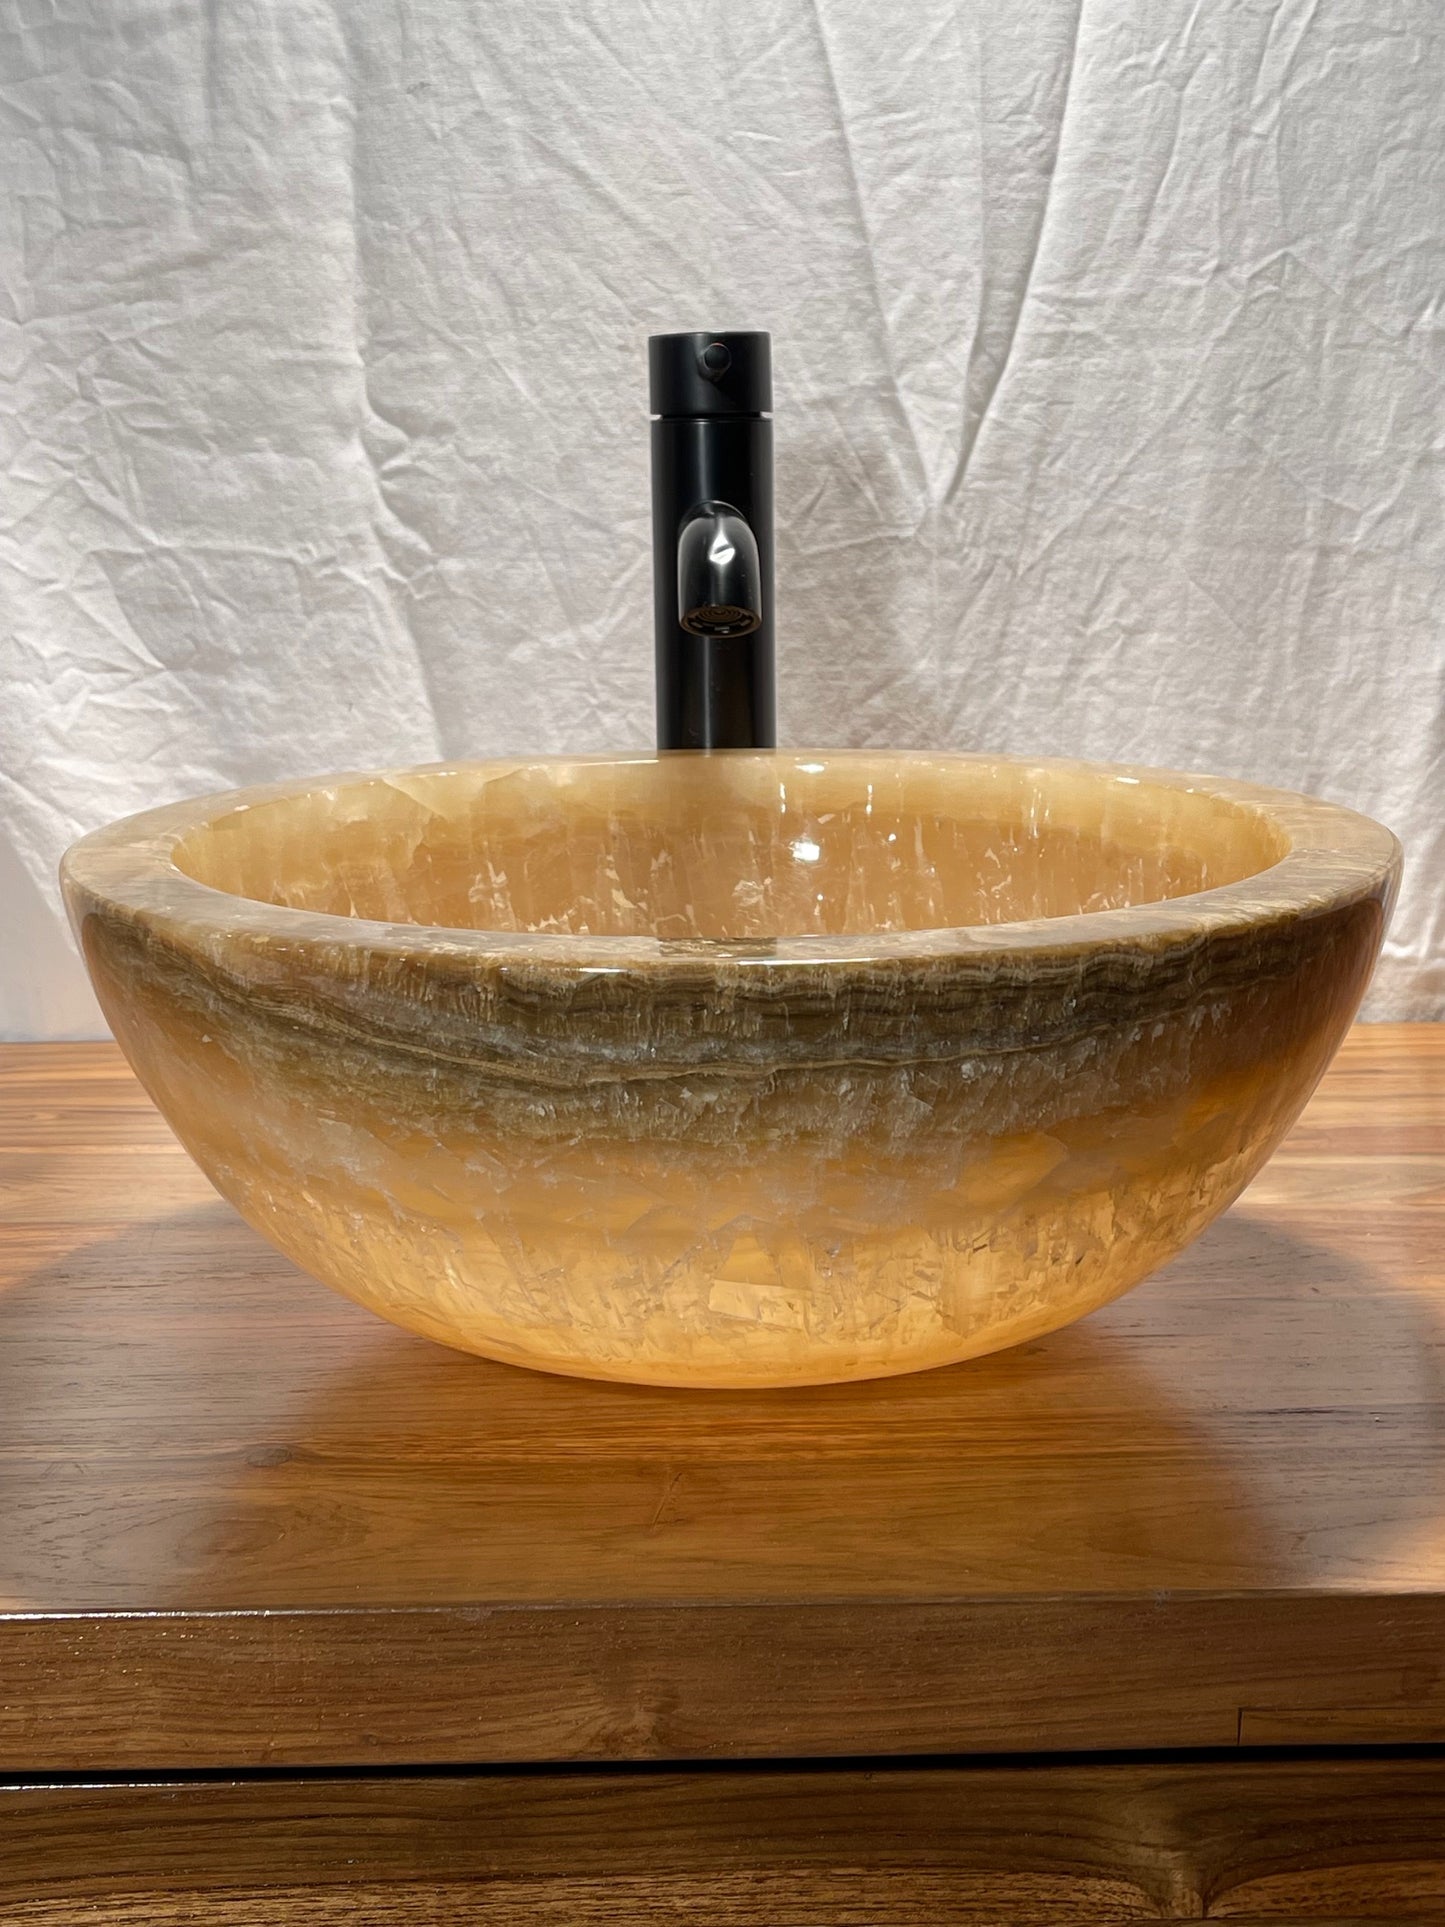 dark honey onyx natural stone vessel sink bowl at impact imports of Boise, Idaho